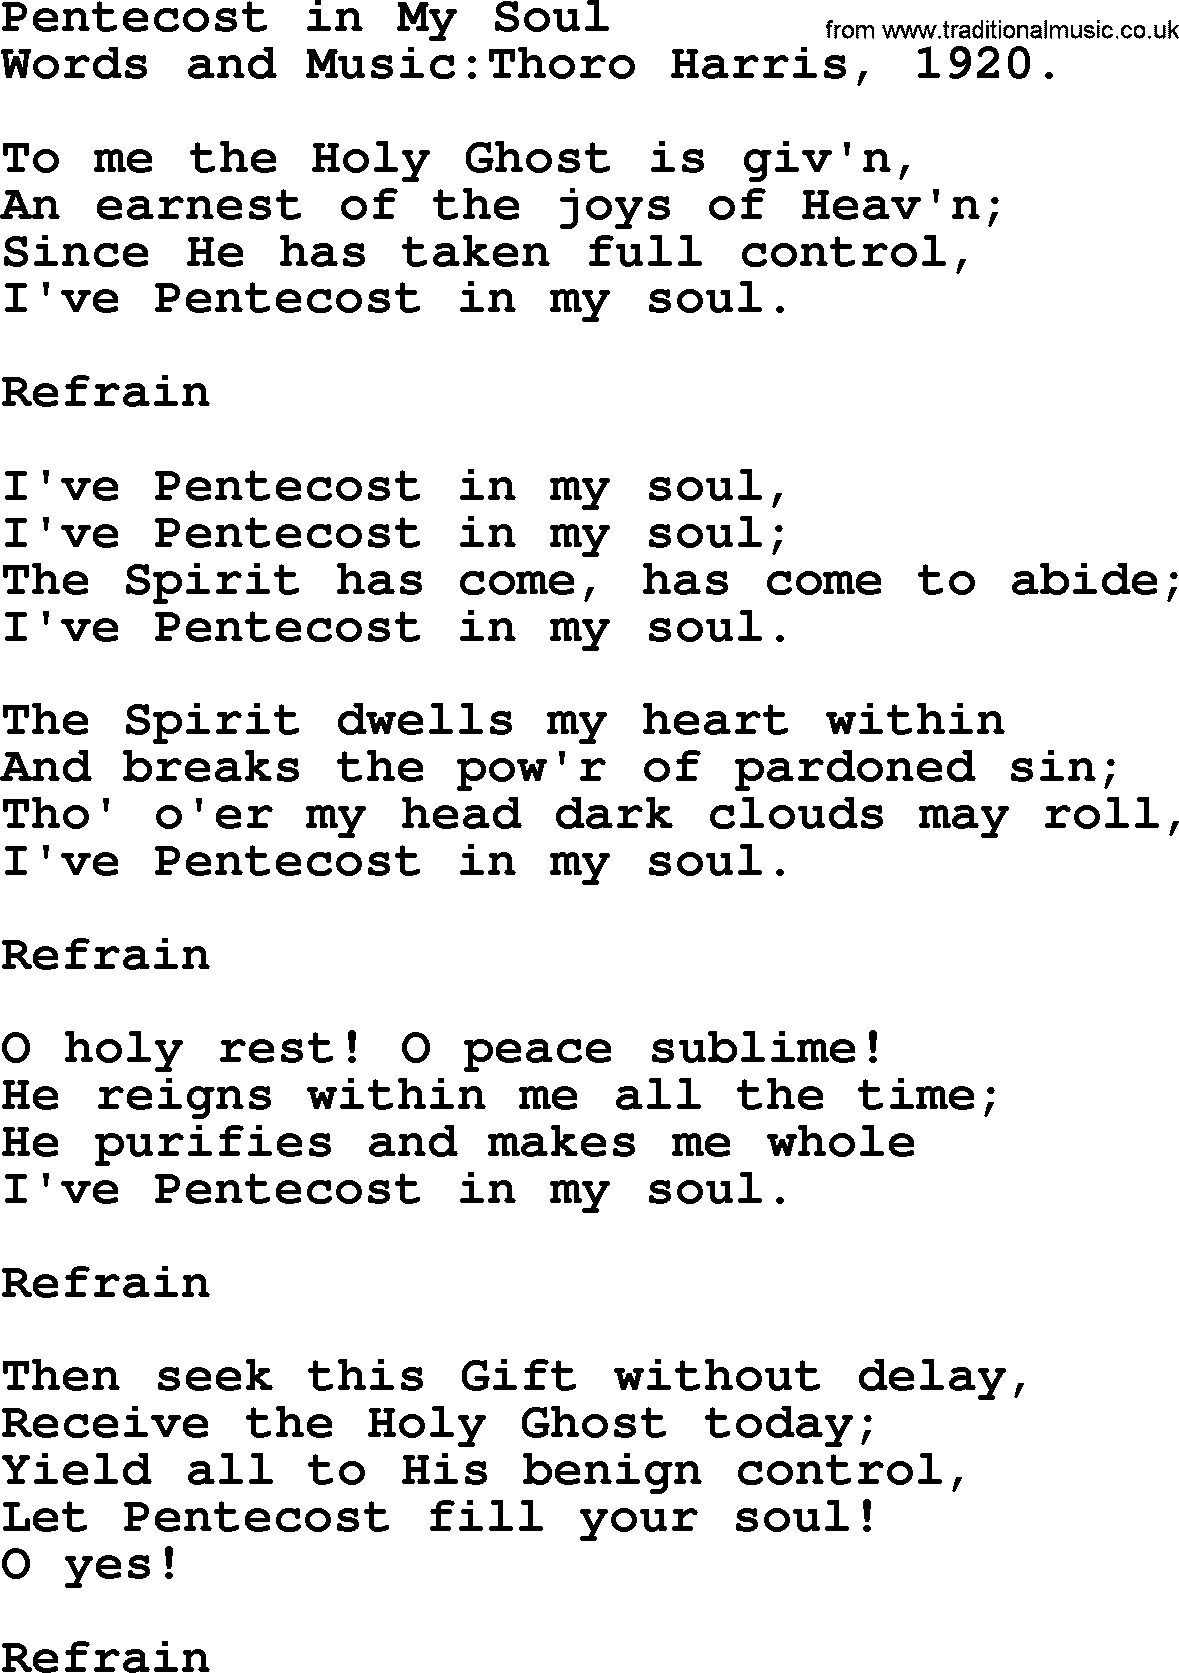 Pentacost Hymns, Hymn: Pentecost In My Soul, lyrics with PDF